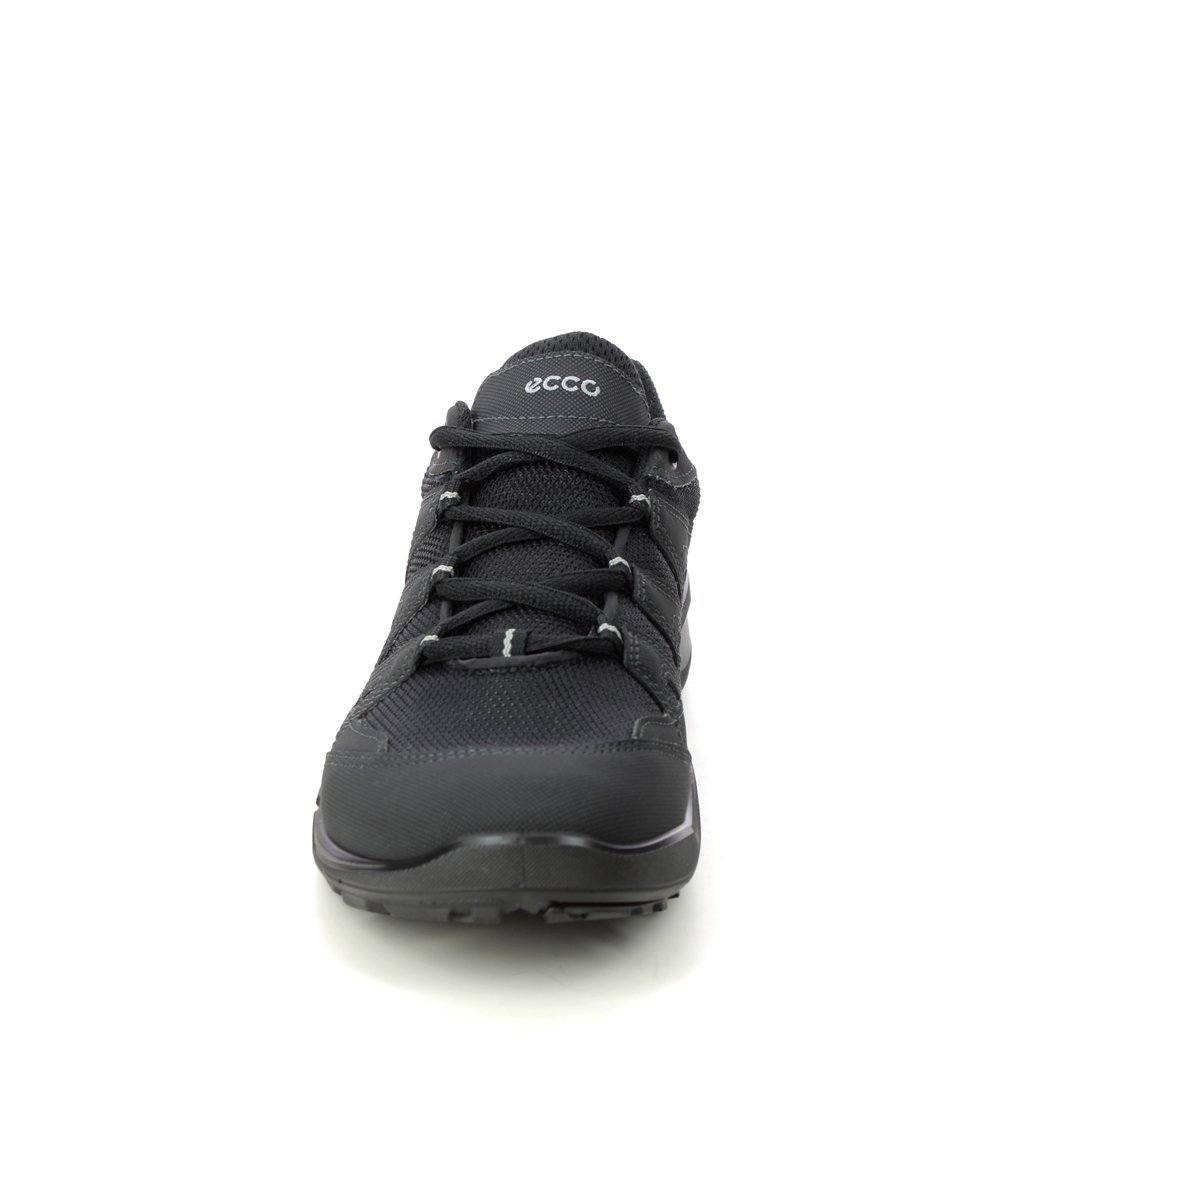 Terracruise Light Gtx Womens 825783-51707 Black Shoes